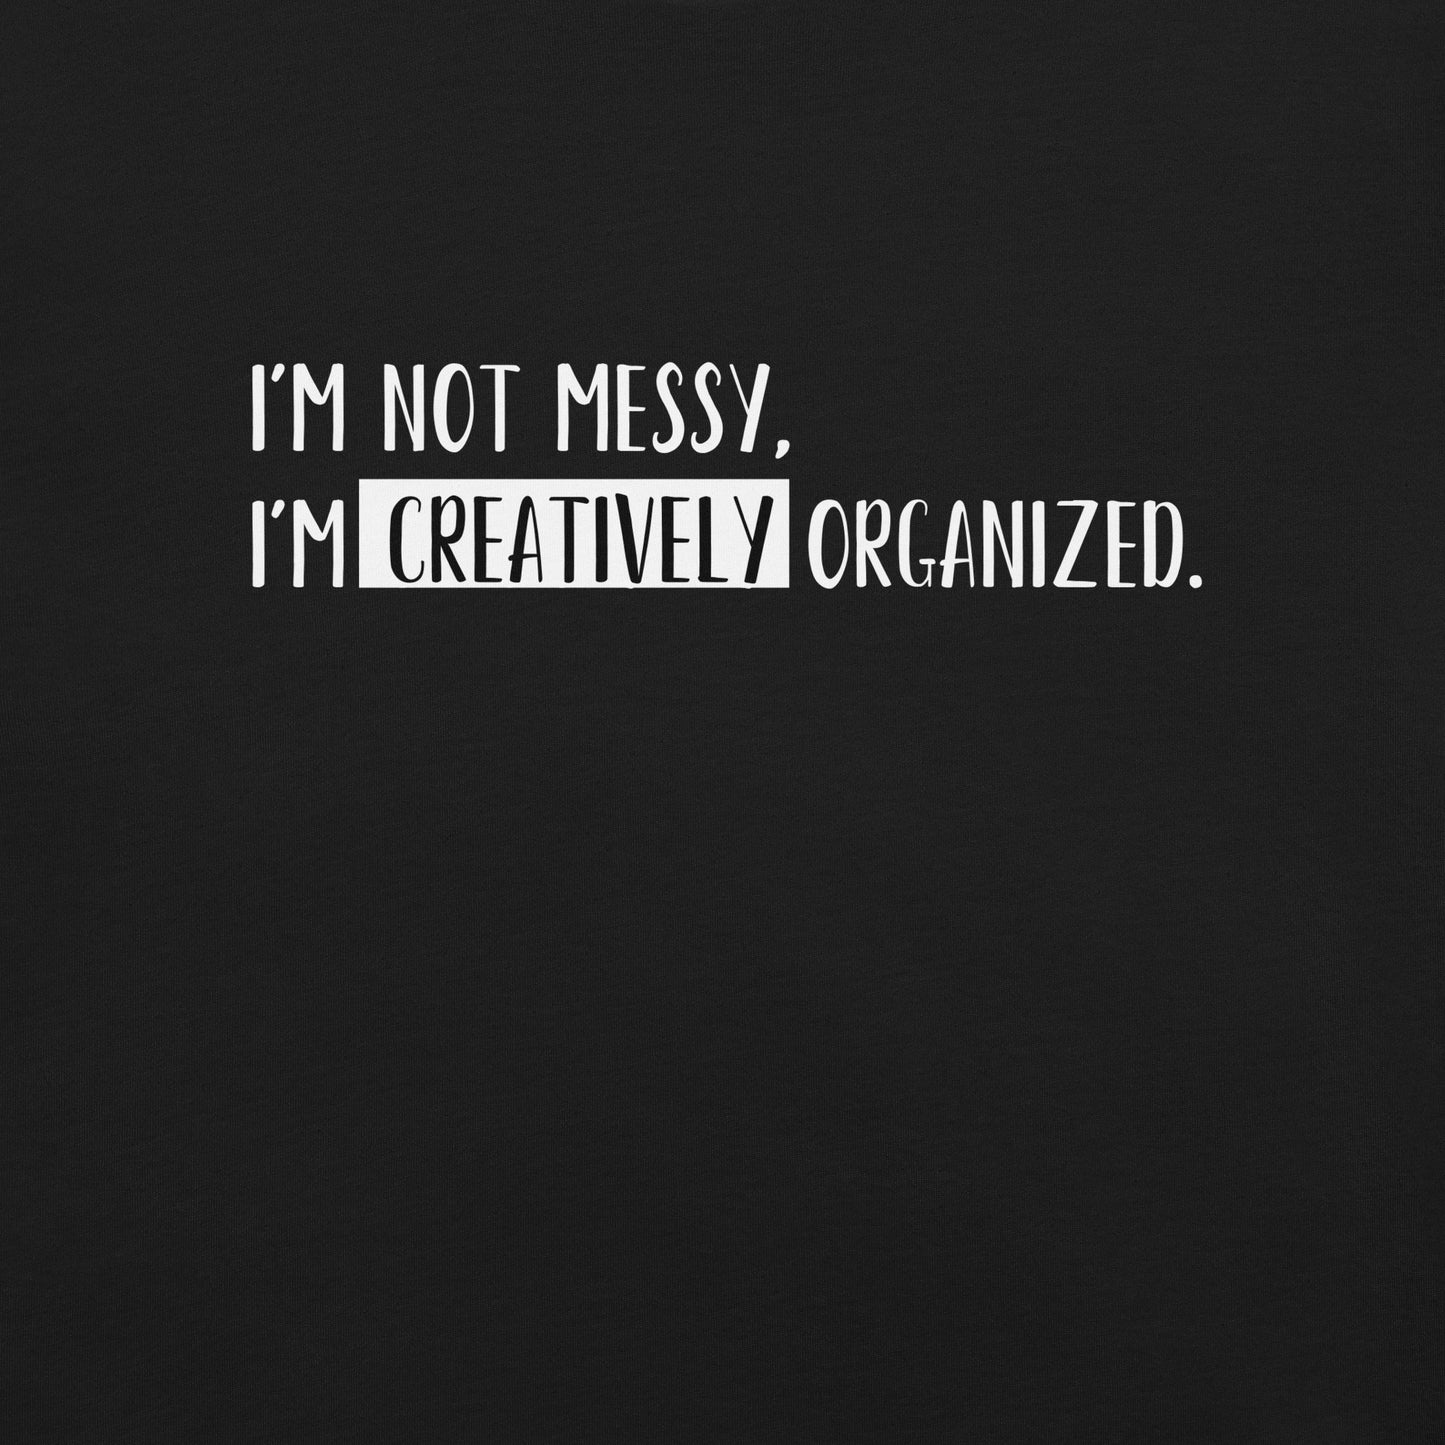 “I’m not messy, I’m creatively organized.” - Unisex t-shirt